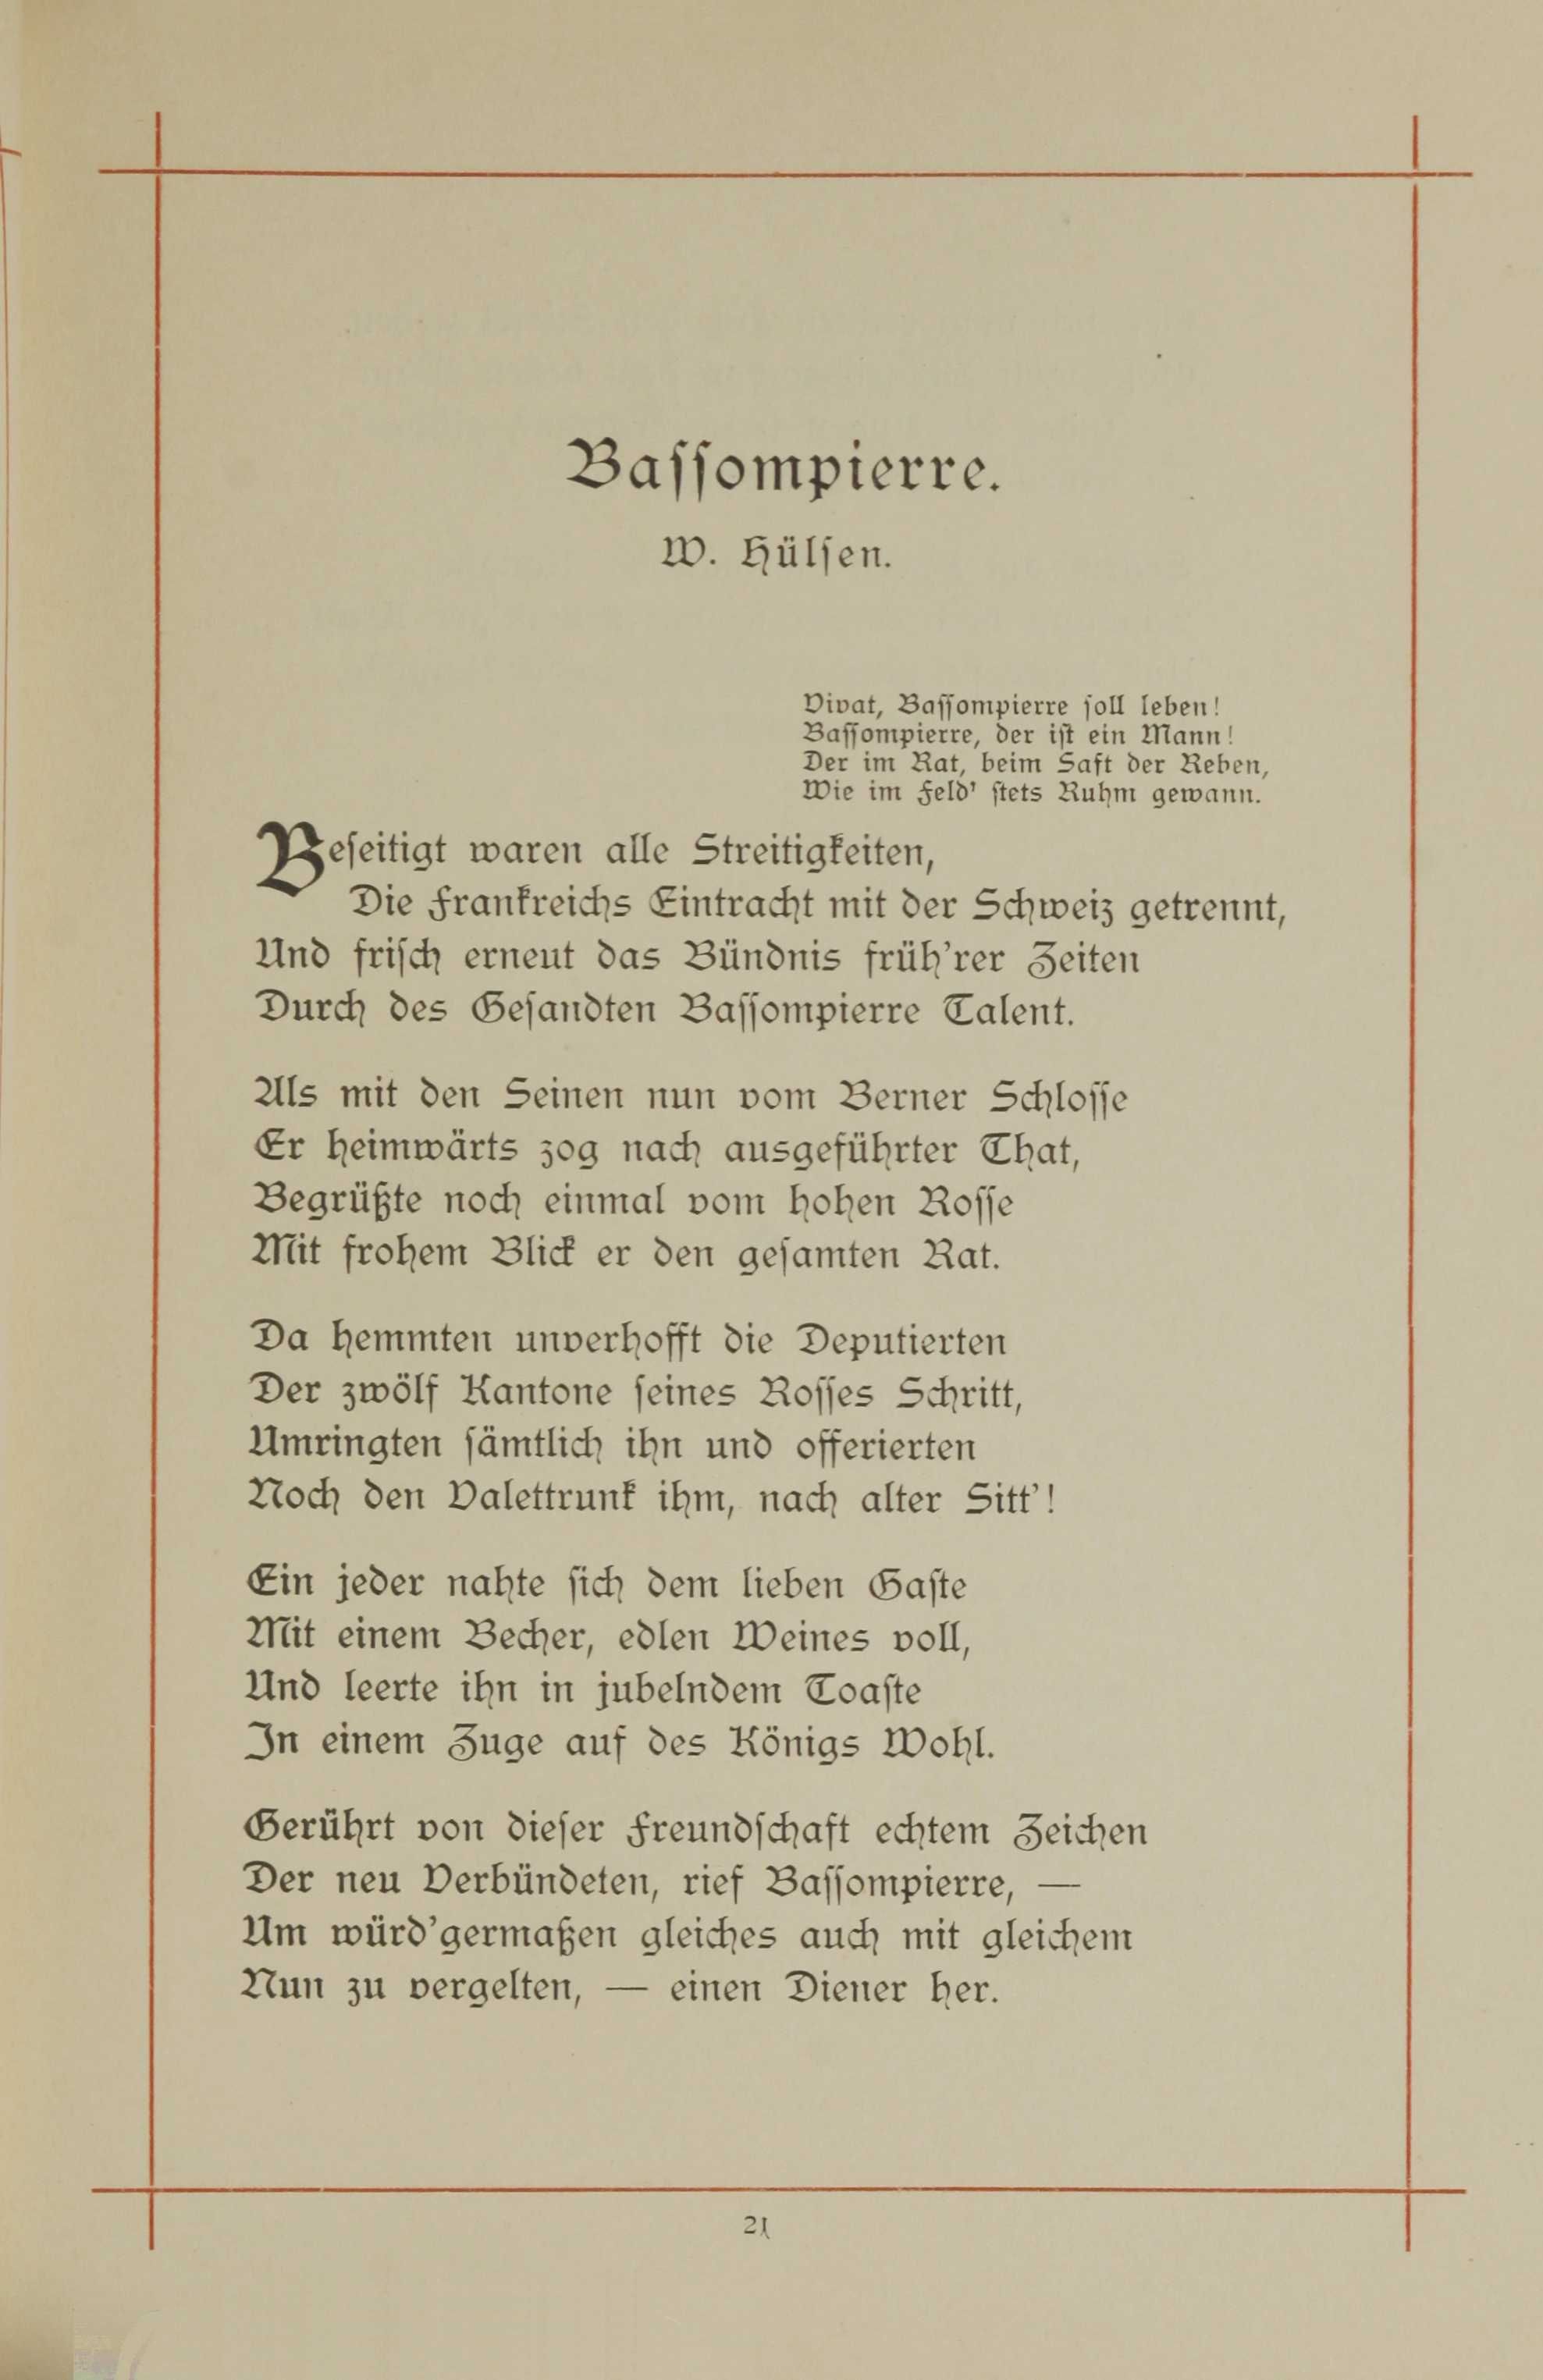 Erinnerung an die Fraternitas (1893) | 26. (21) Main body of text